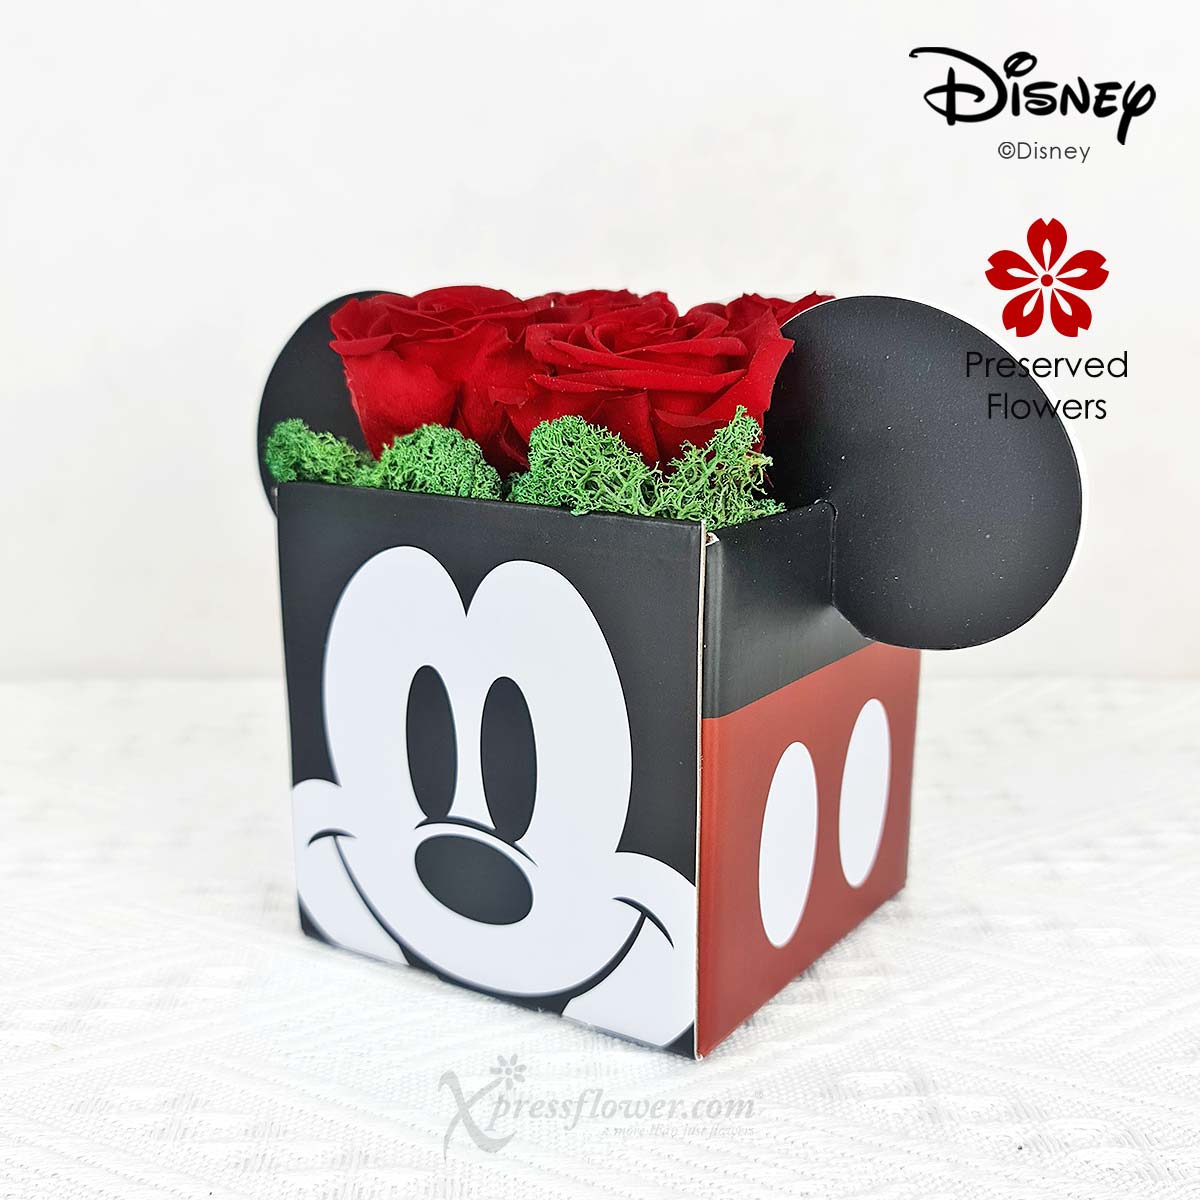 VDS2483_Mickey Blooms Disney Preserved Flowers_1B